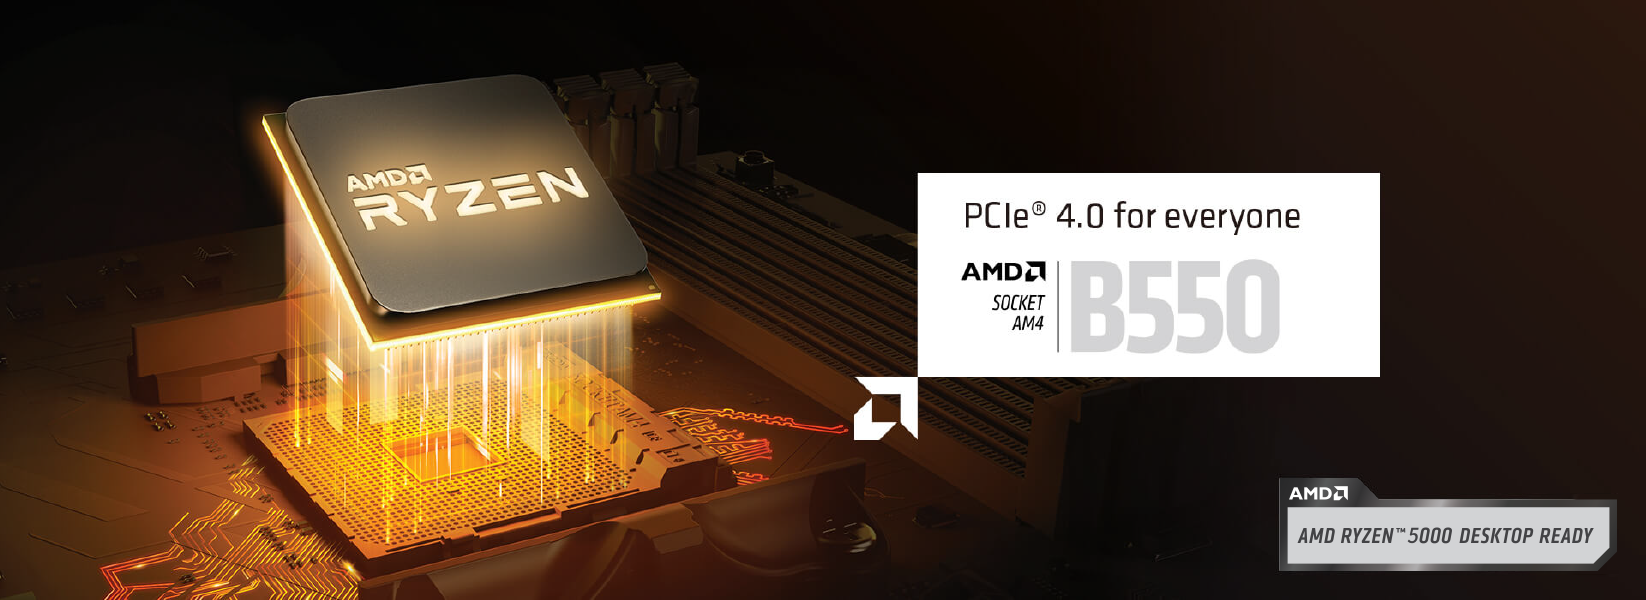 B550_AMD_banner